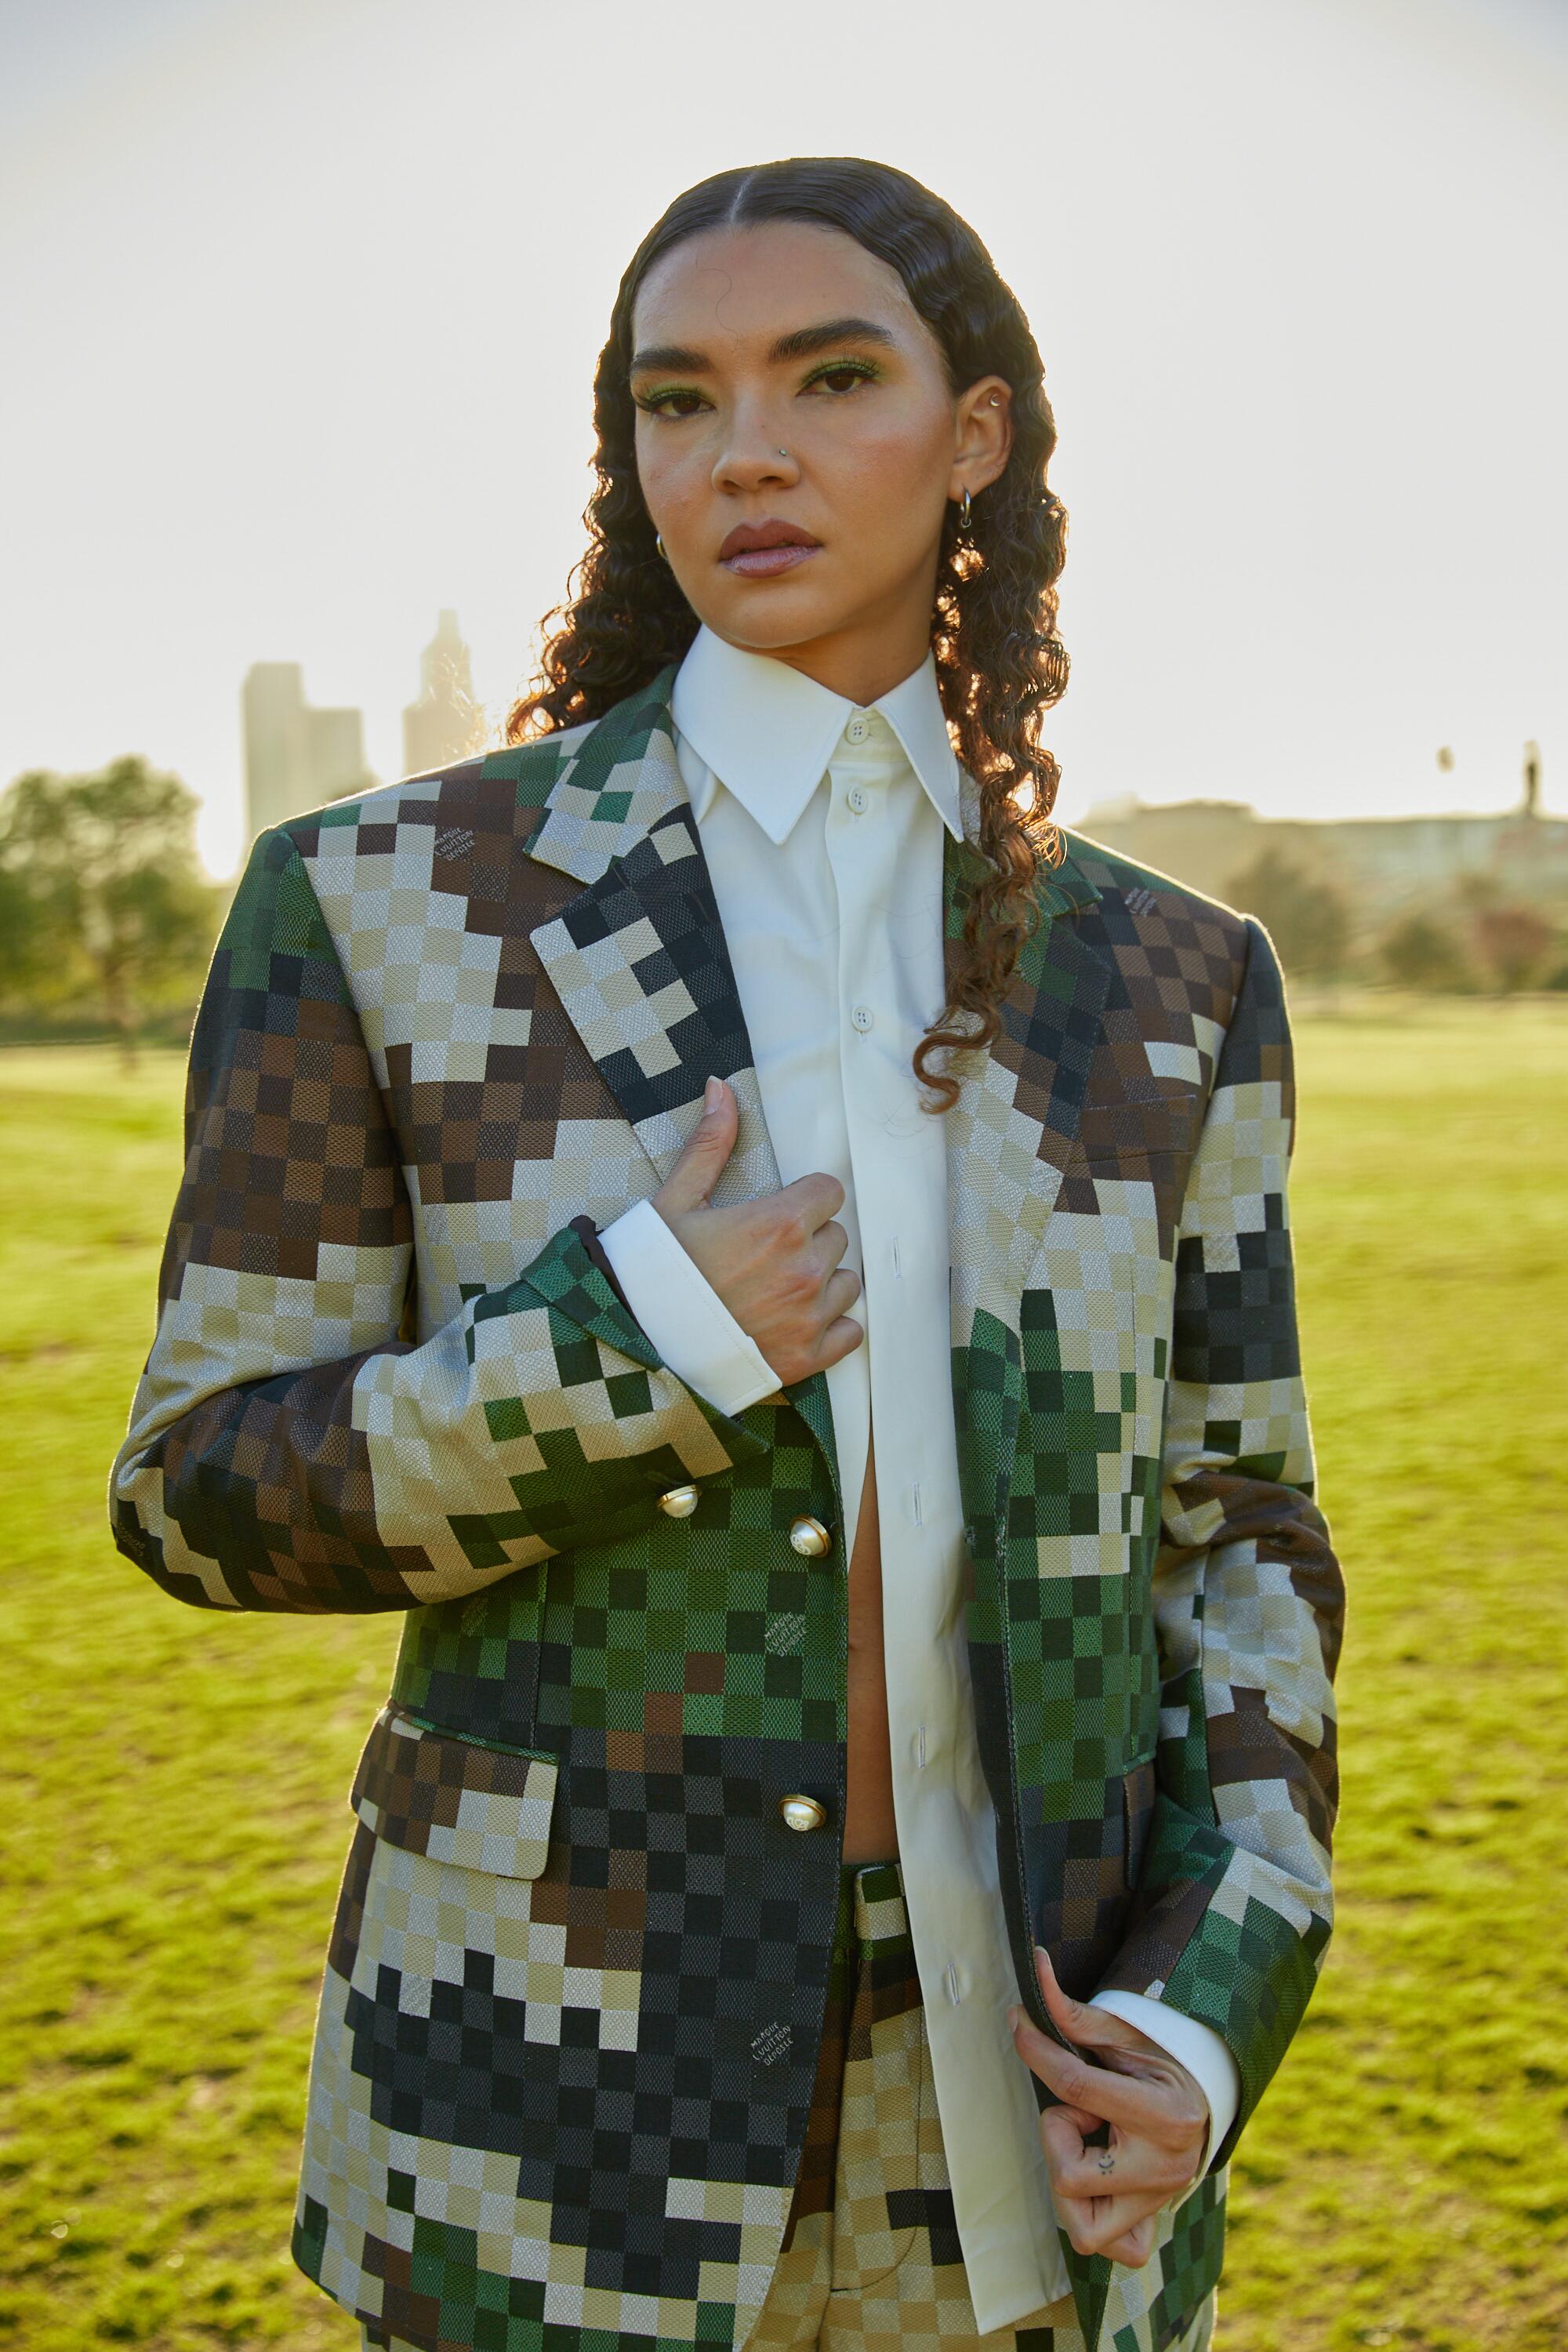 A model wears a pixelated Louis Vuitton jacket in a park.